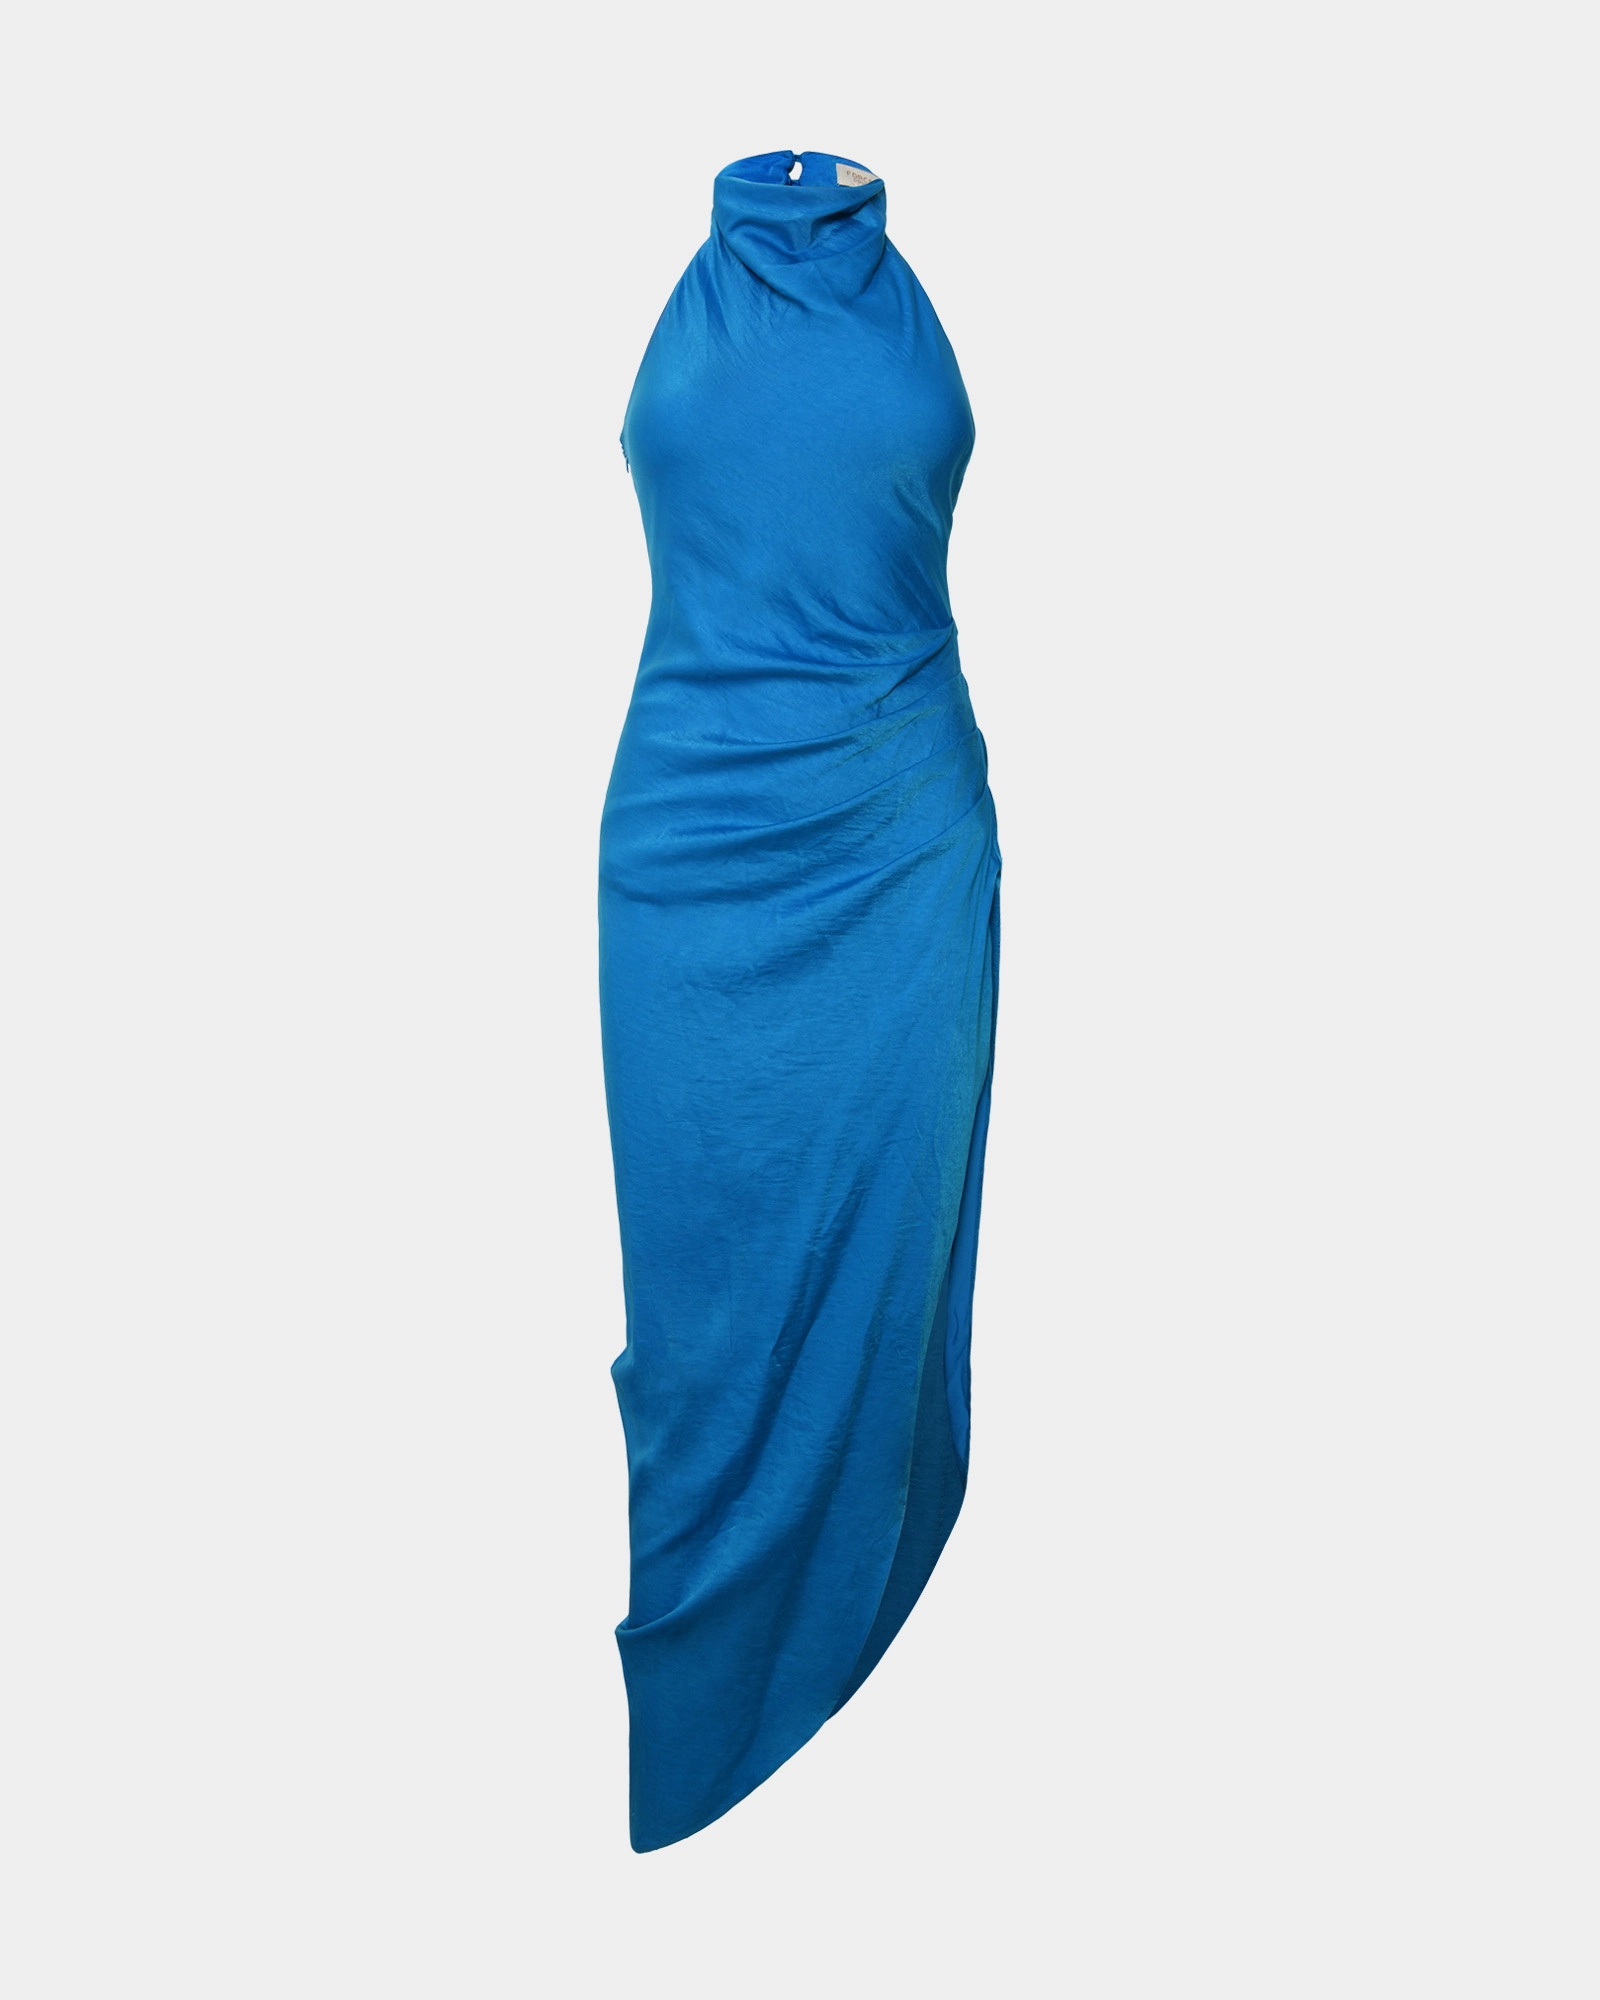 Sydney Backless Draped Dress | Cyan Blue | Forcast - Forcast AU